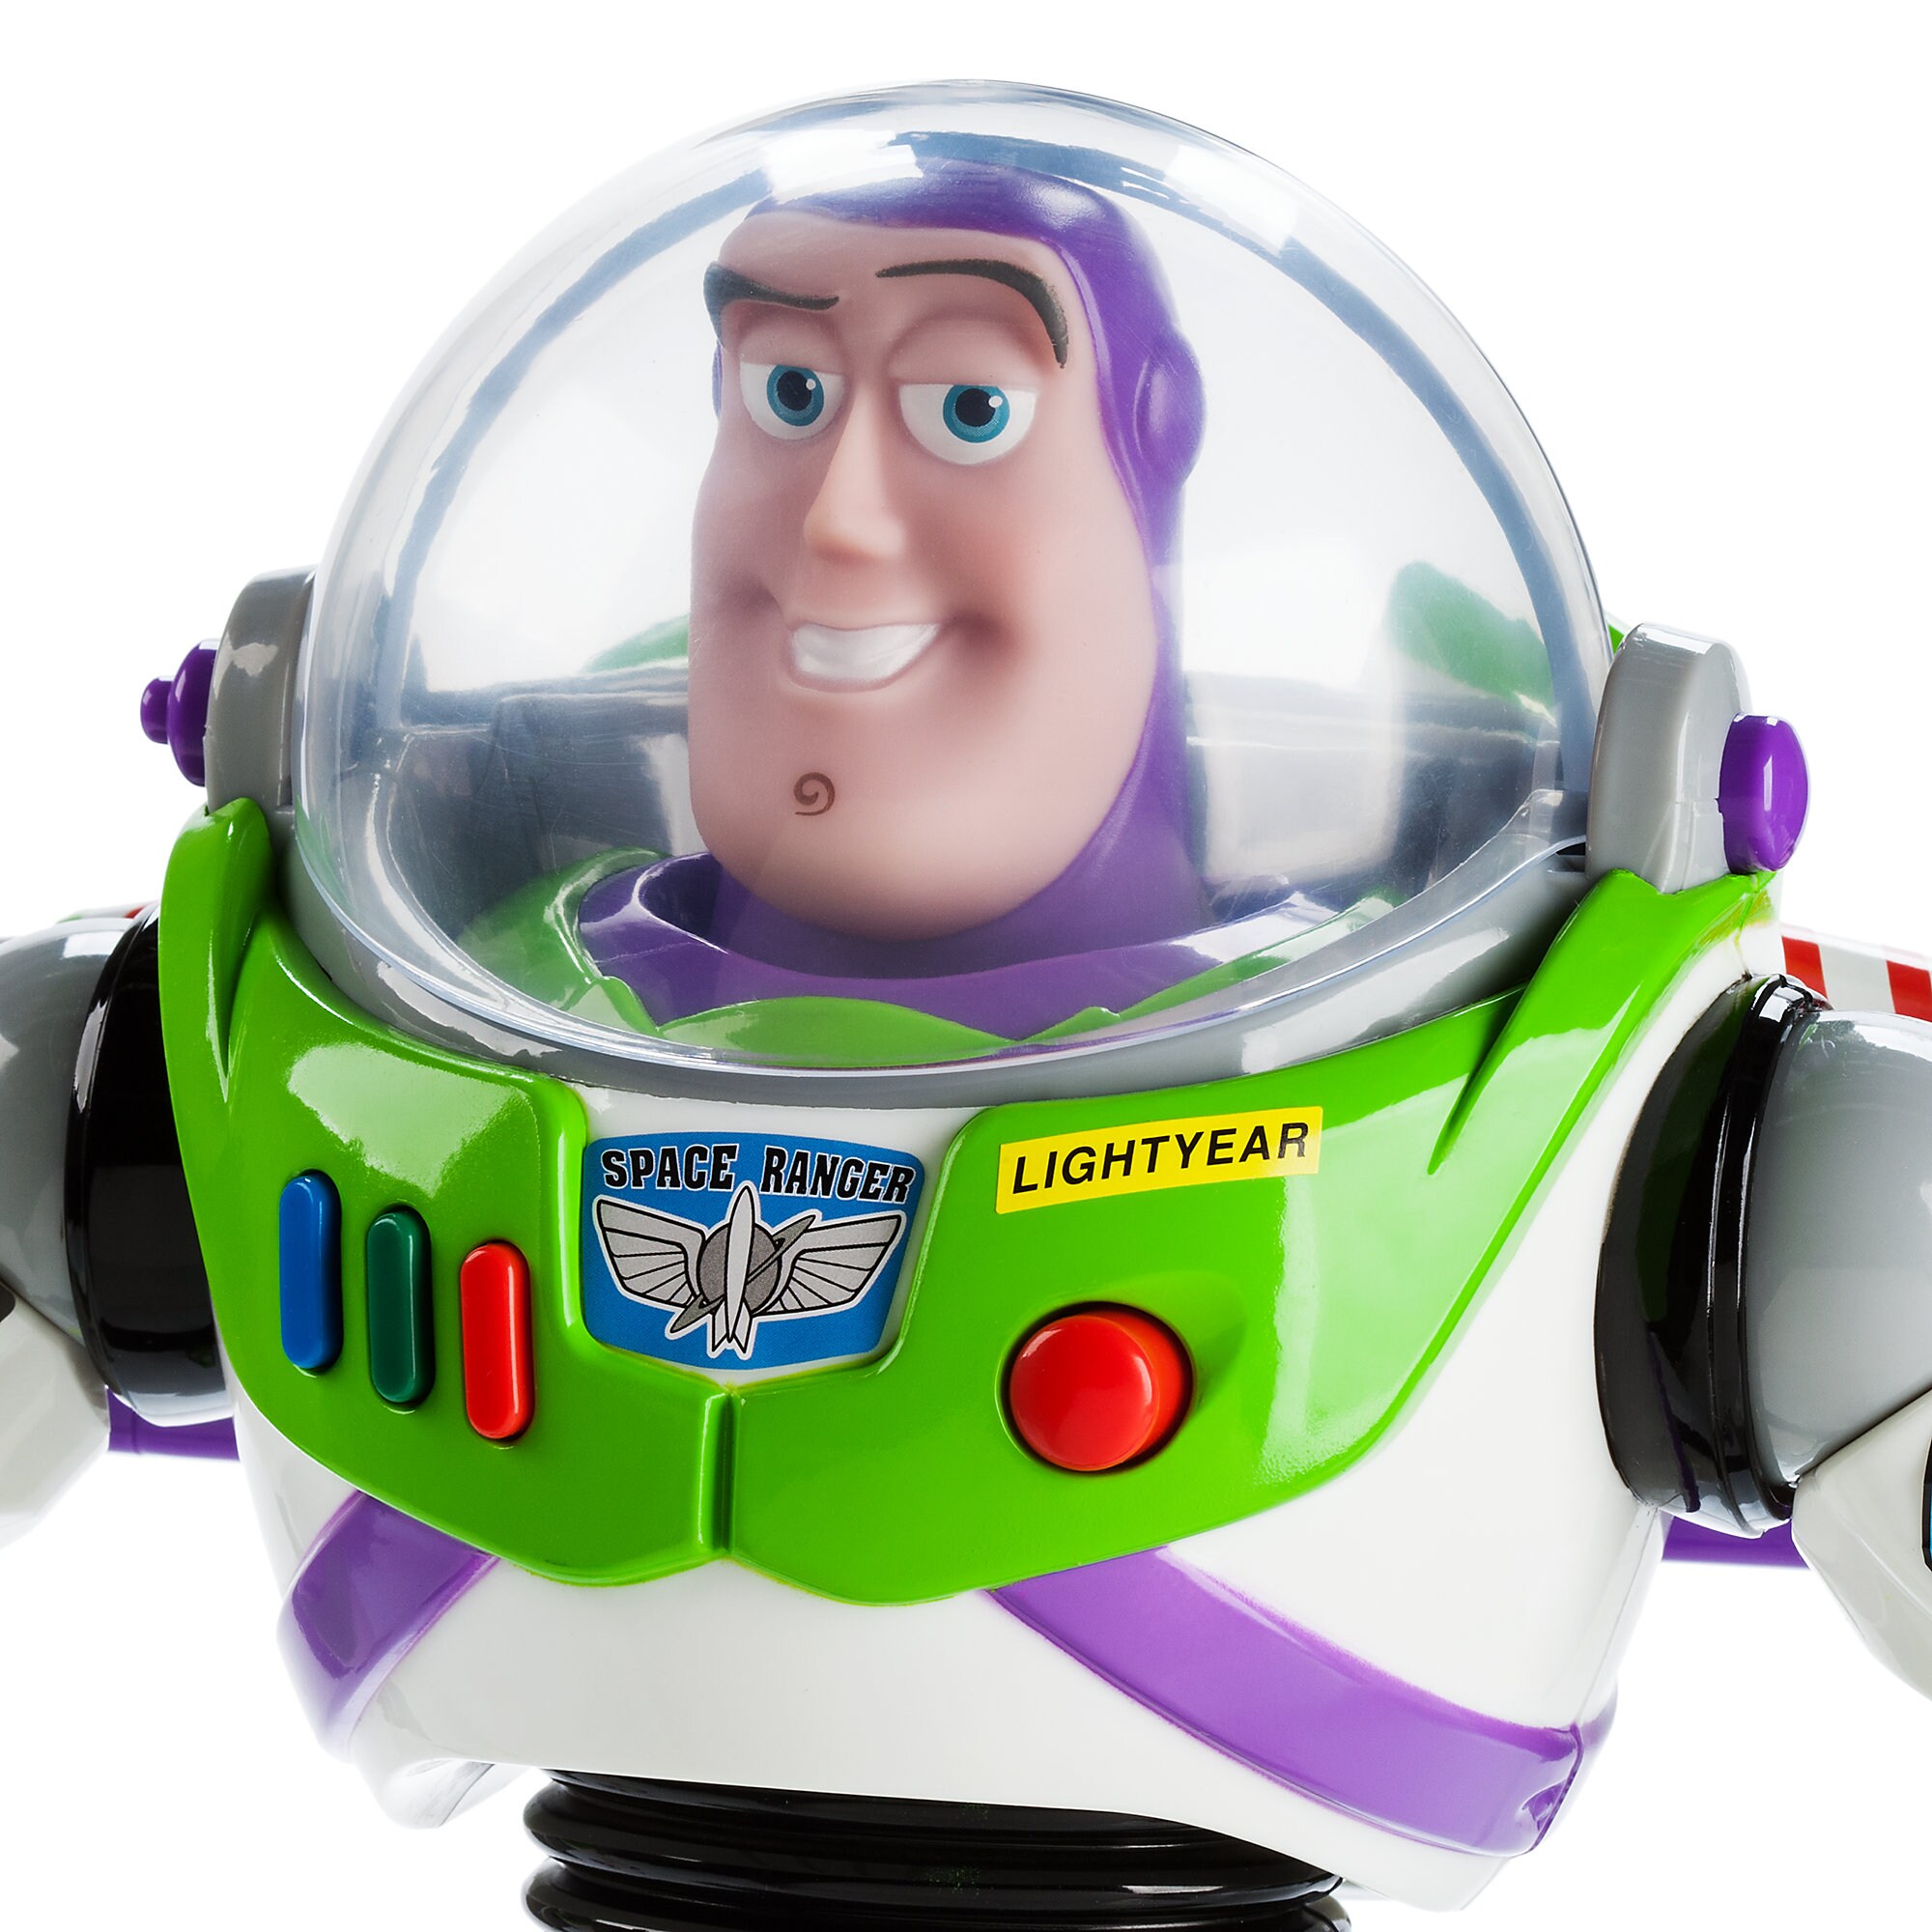 Buzz Lightyear Interactive Talking Action Figure - 12''